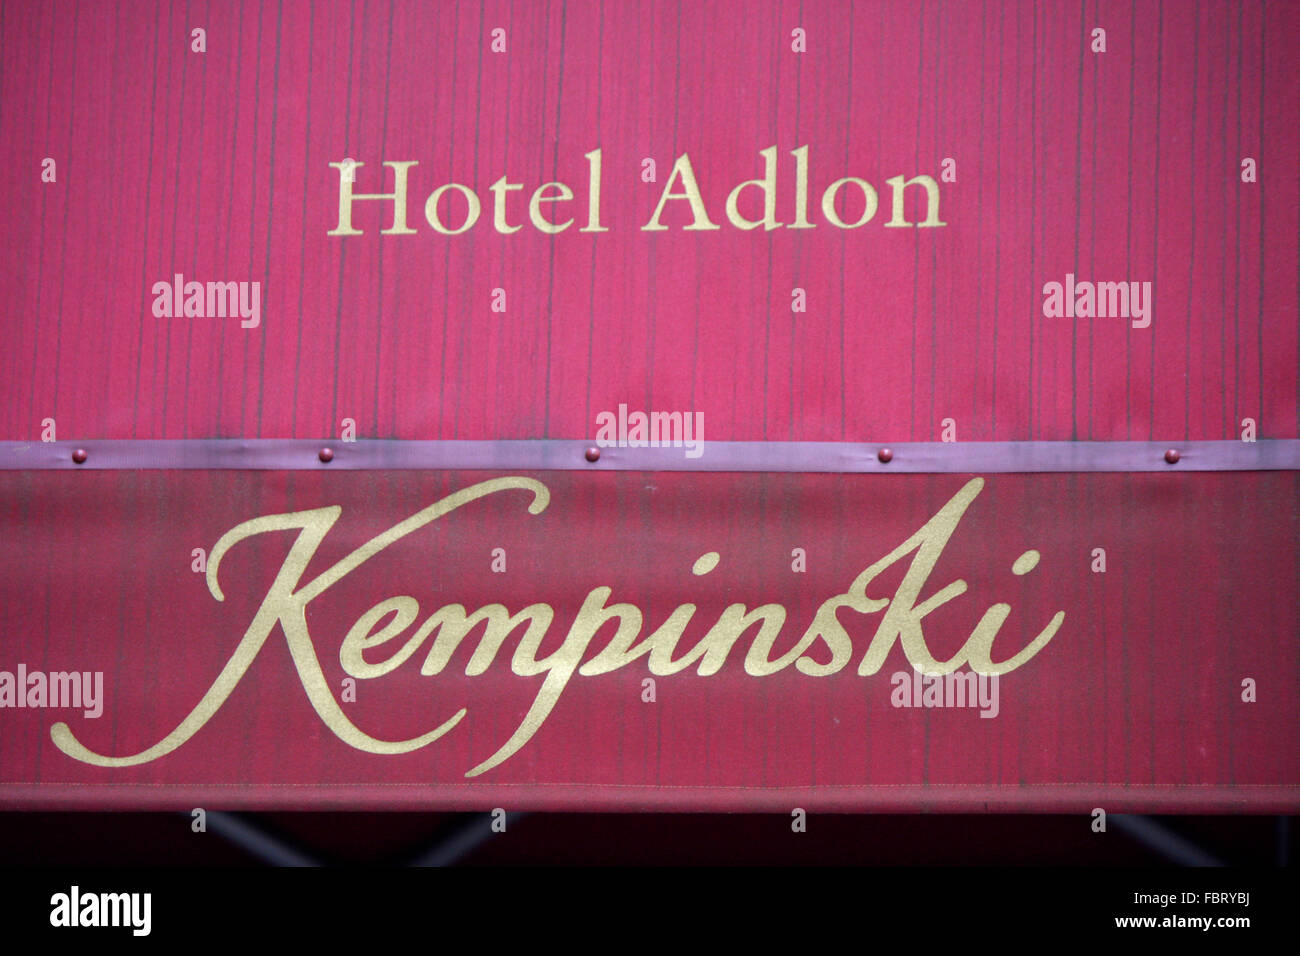 Markenname: "Hotel Adlon" und "Kempinski", Berlin. Stock Photo